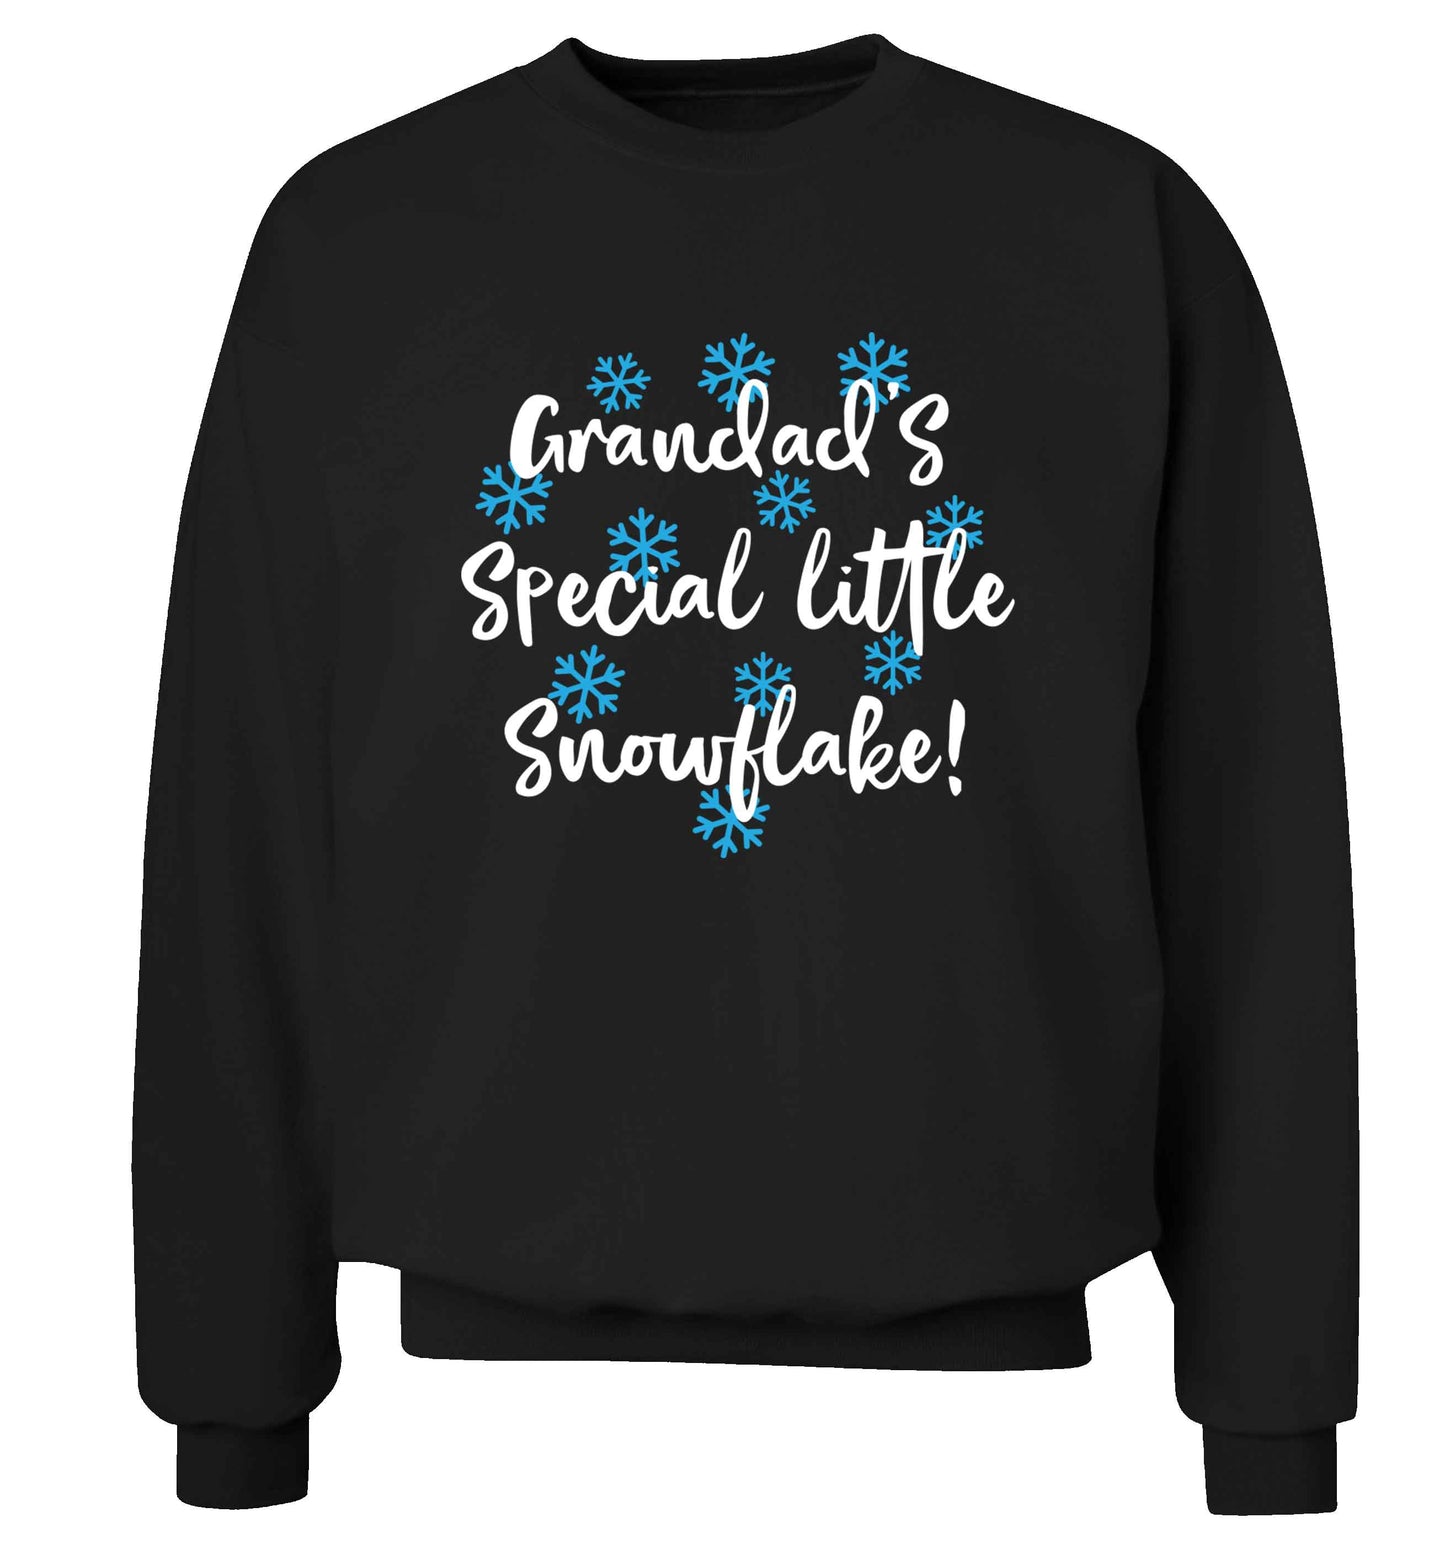 Grandad's special little snowflake Adult's unisex black Sweater 2XL